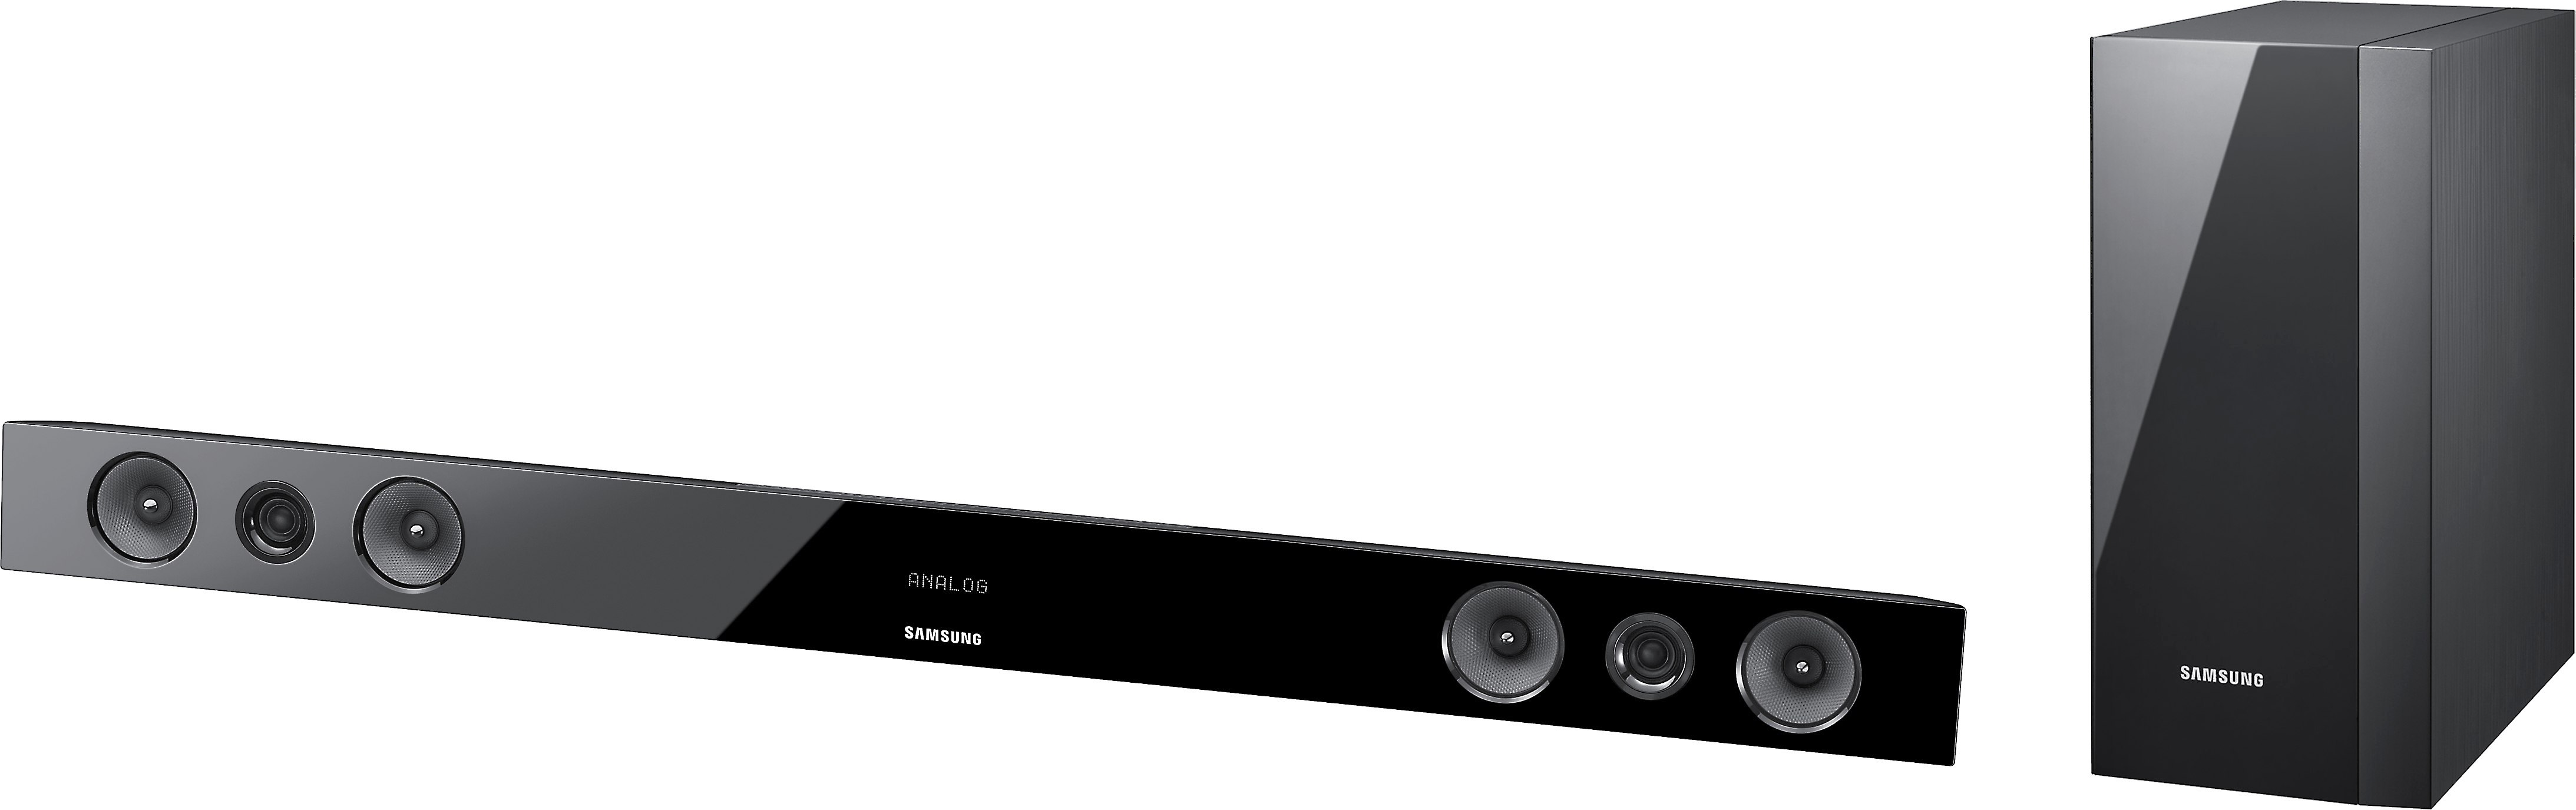 Samsung HW-E450 Powered home theater 